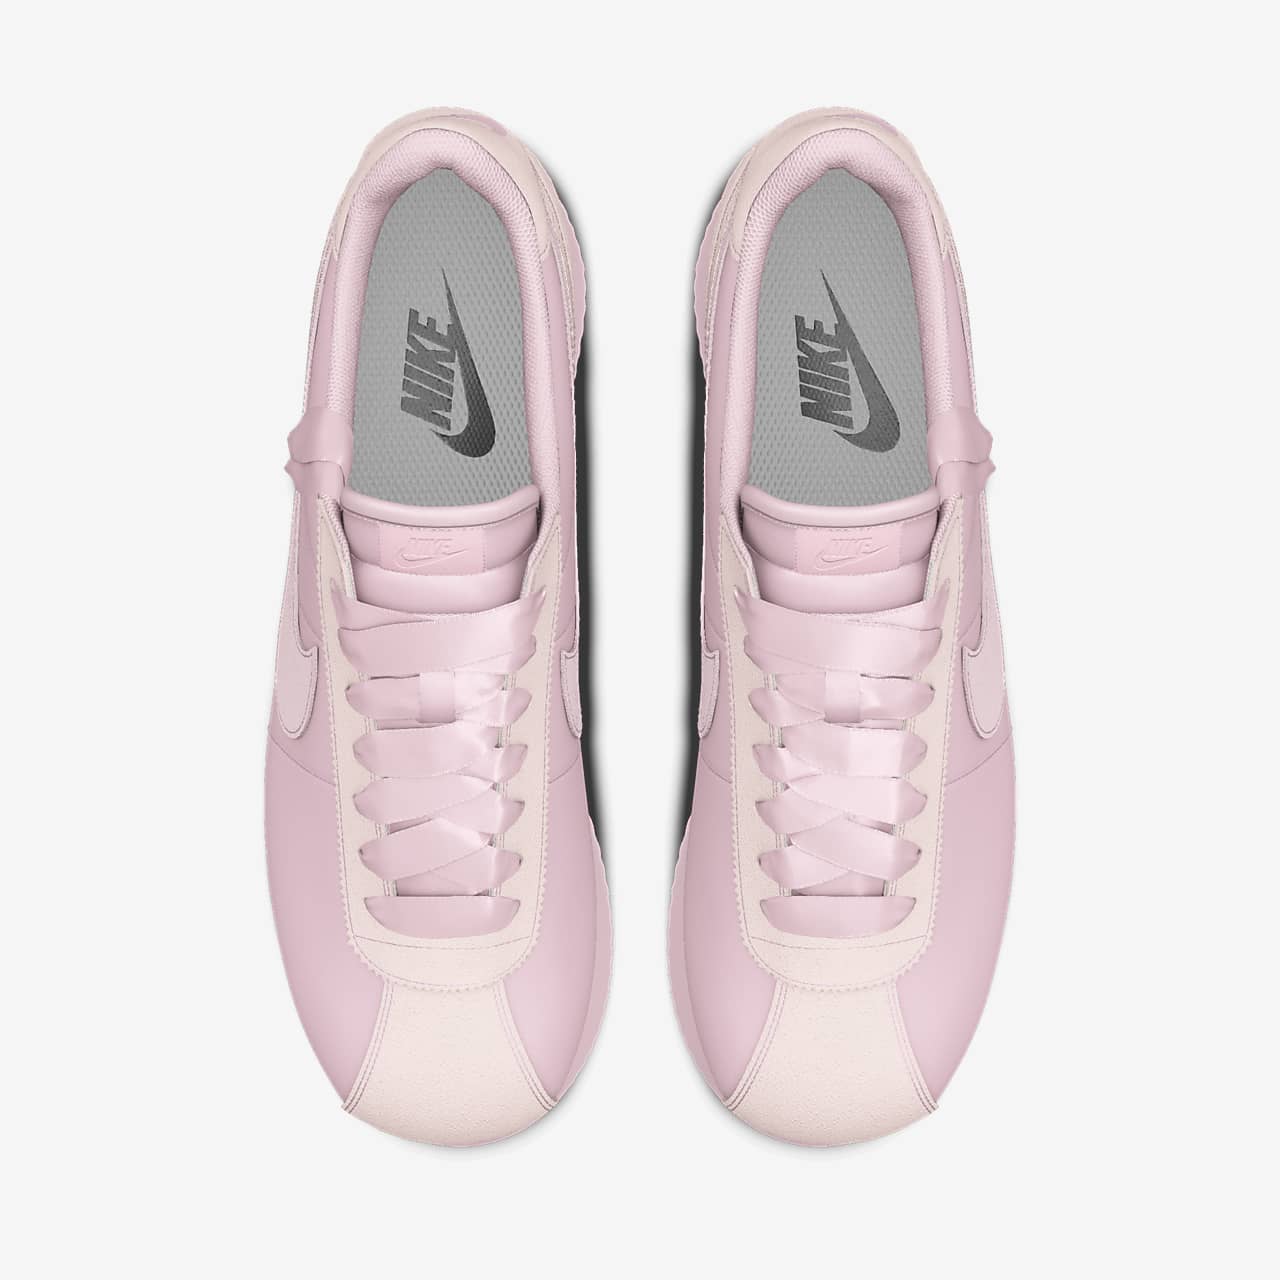 Nike Cortez Platform Unlocked By You Custom Women's Shoes